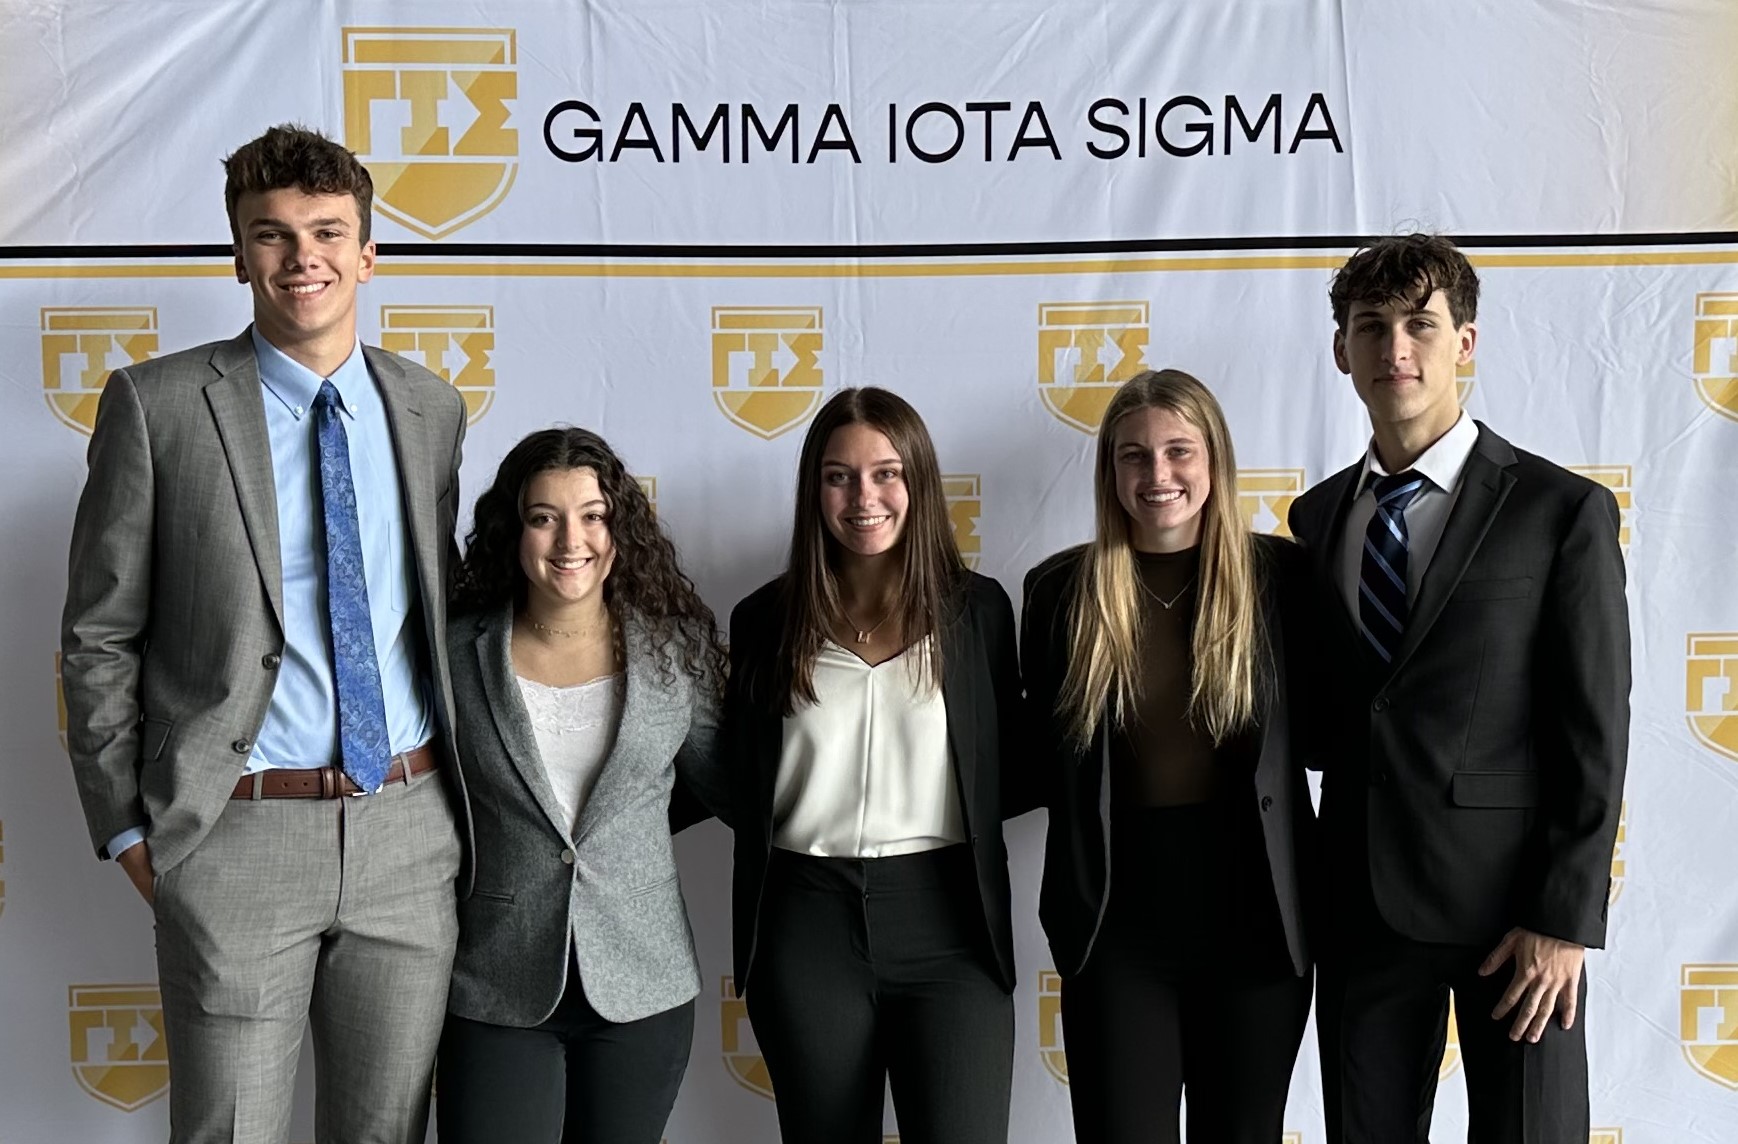 Insurance students at Gamma Iota Sigma in Baltimore